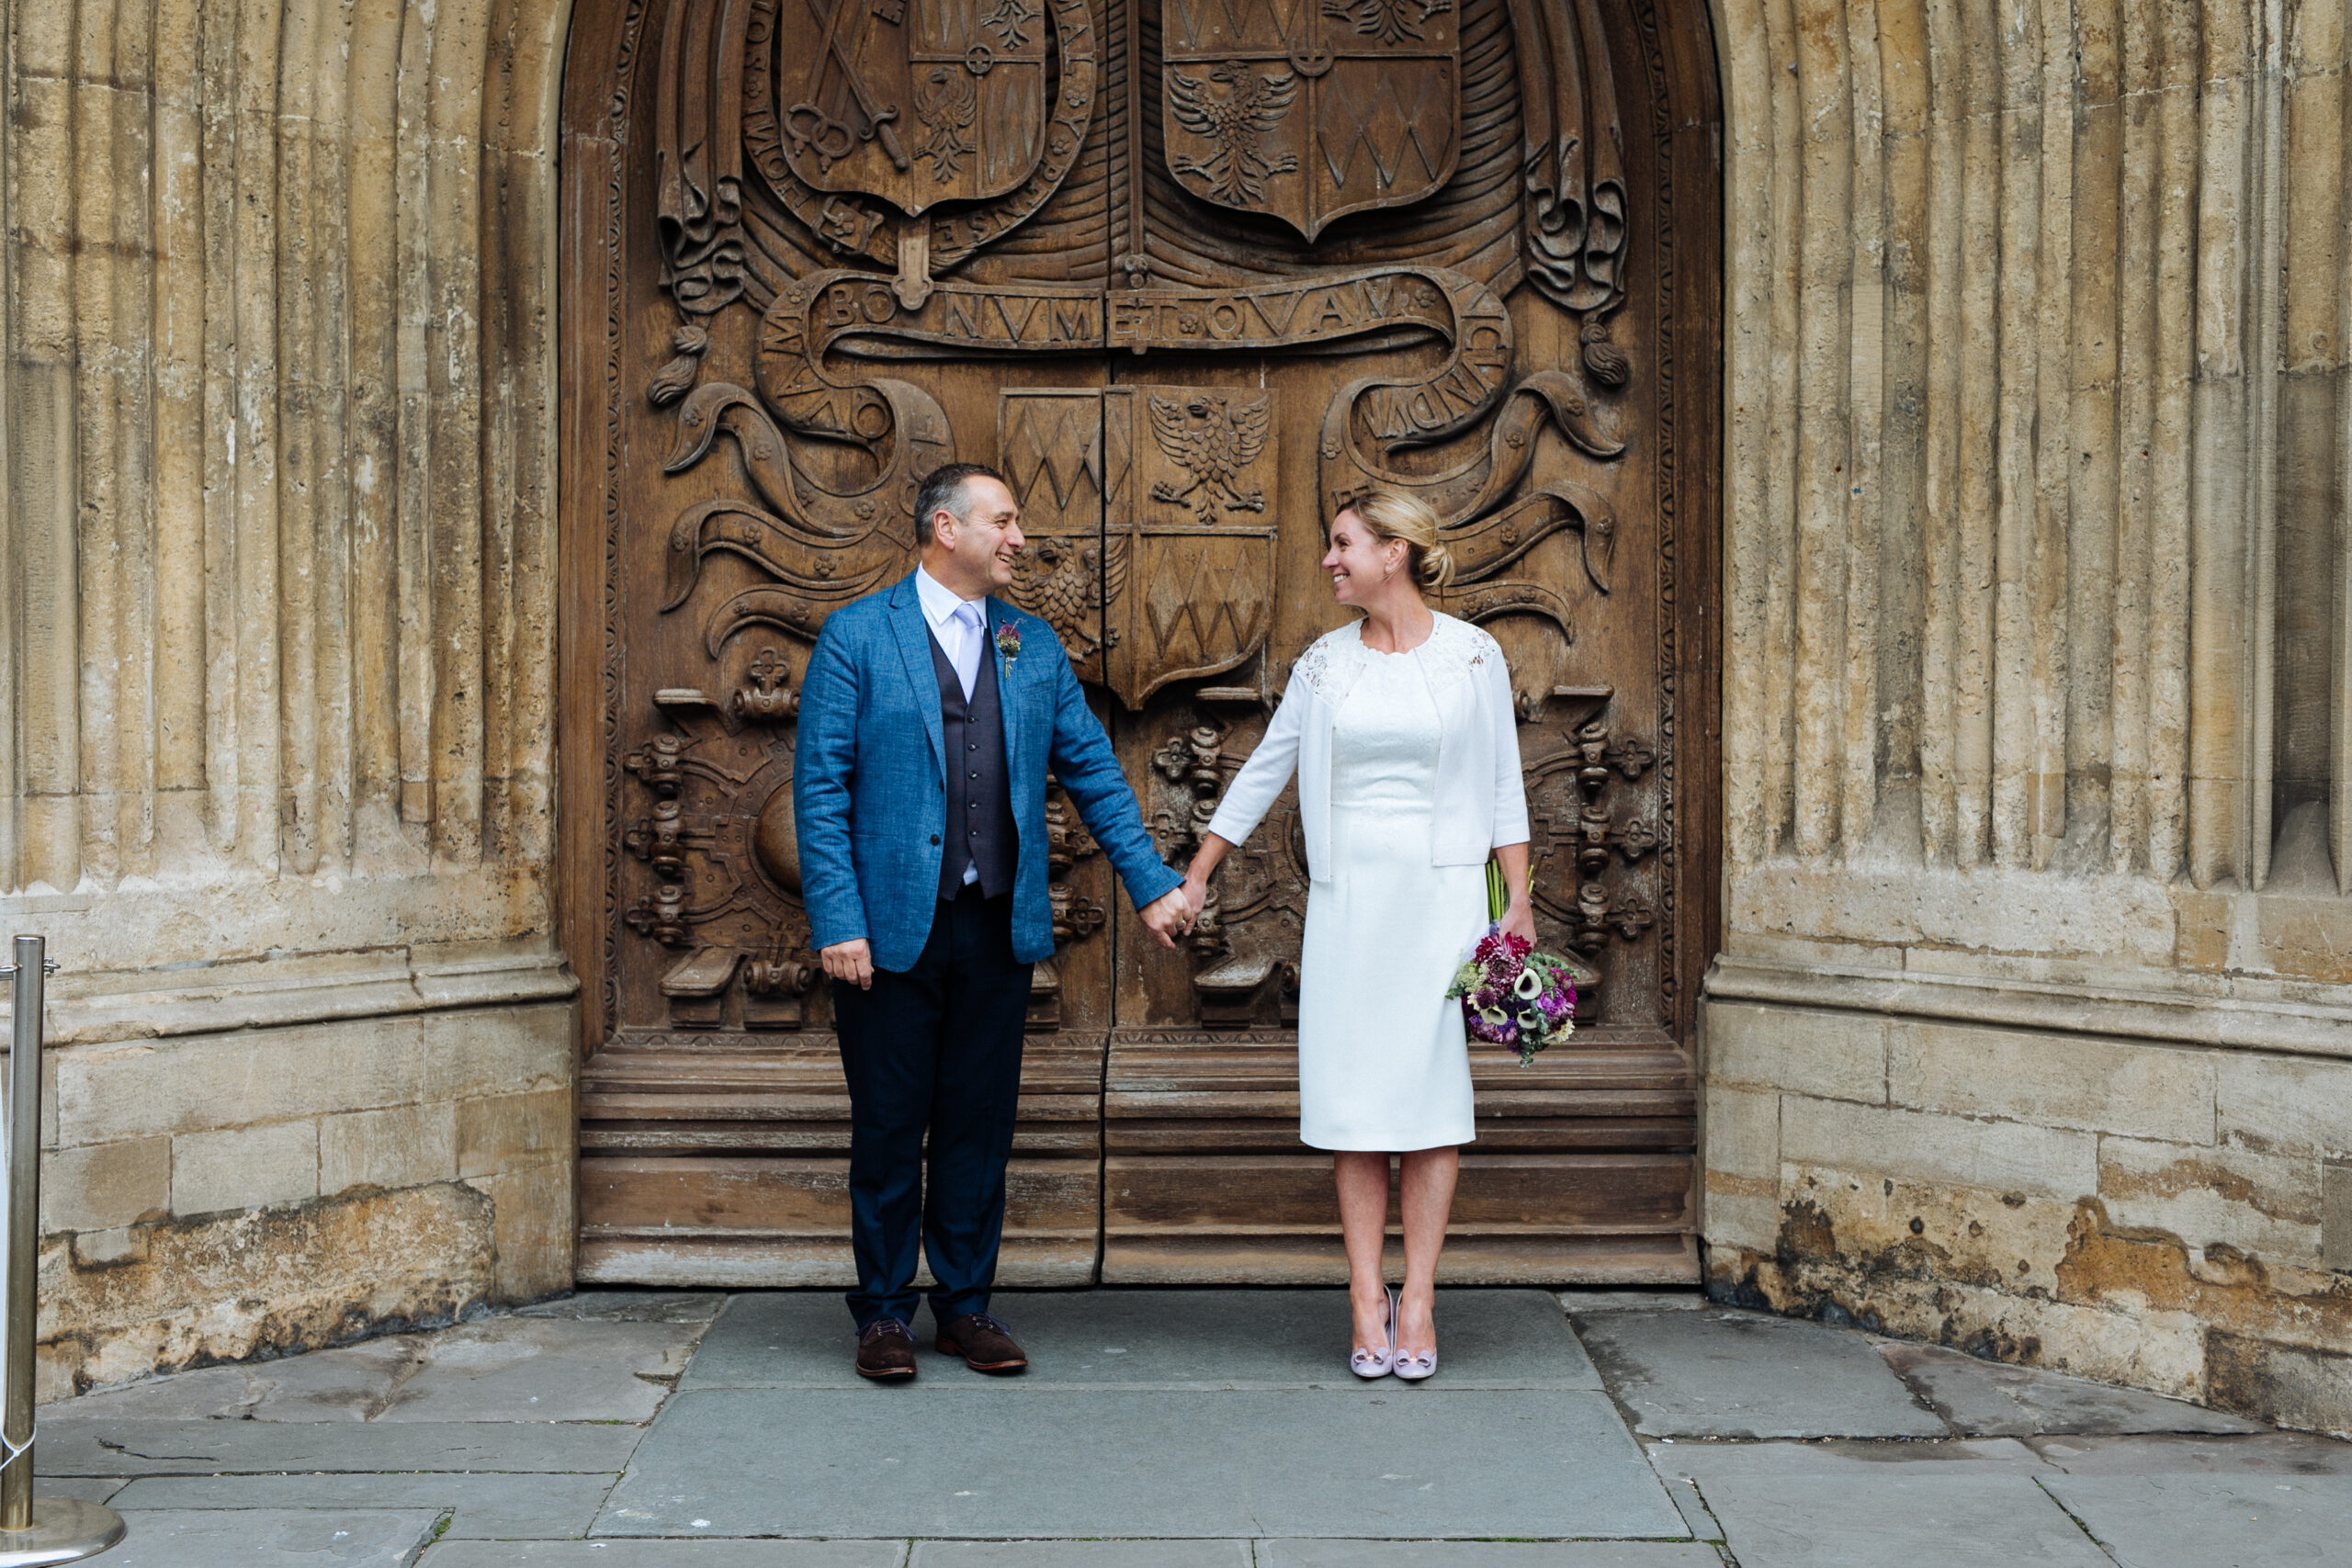 Guildhall Bath Wedding Photography – Tara & Adge